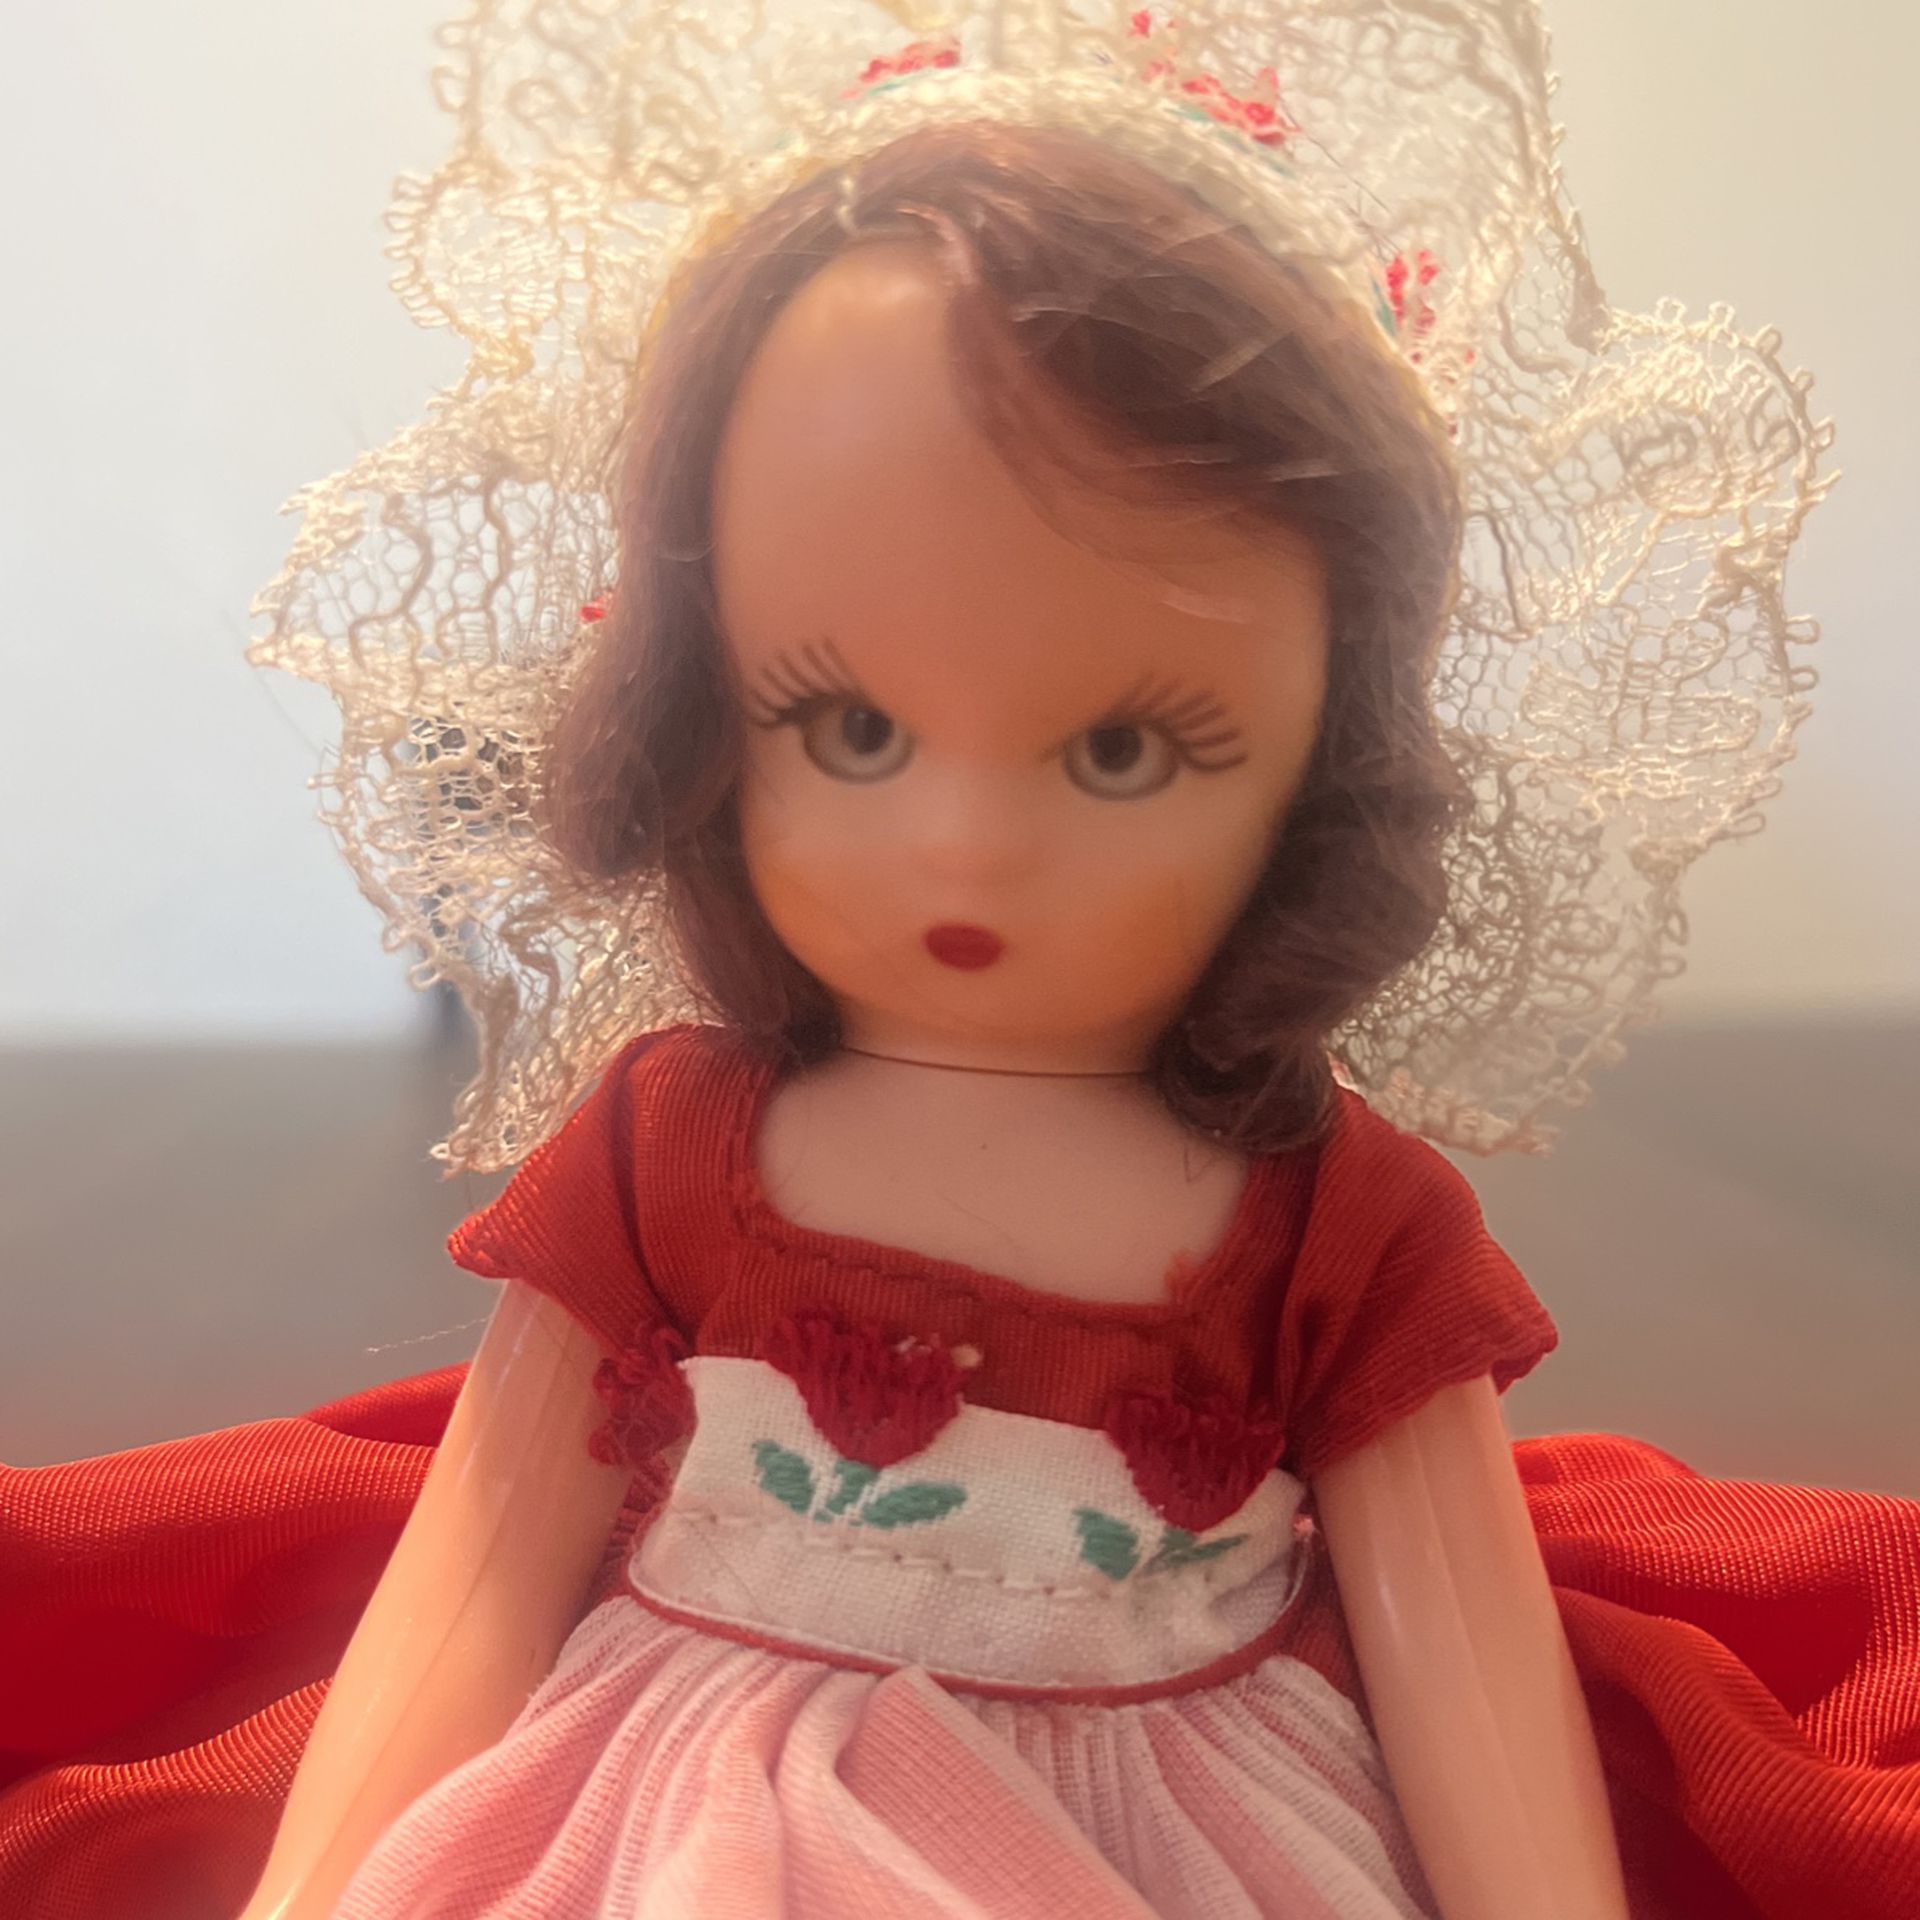 Nancy Ann Storybook Doll $20